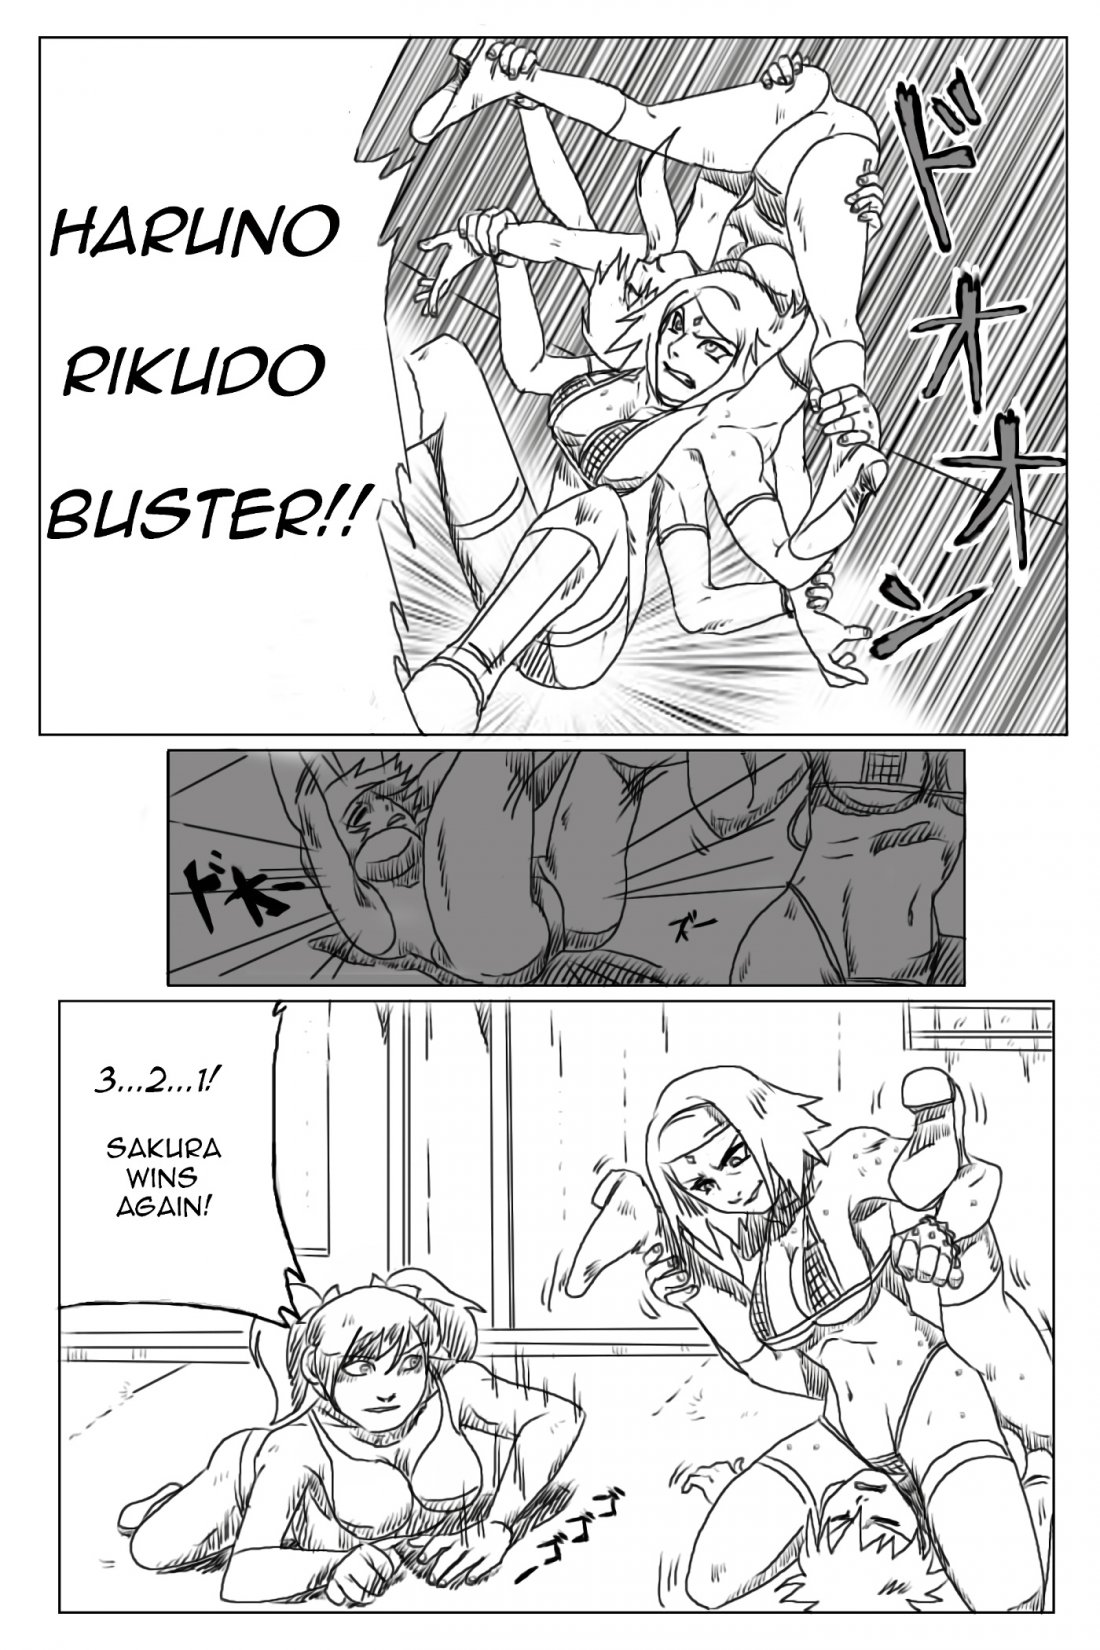 Narusaku love buster wrestling porn comics